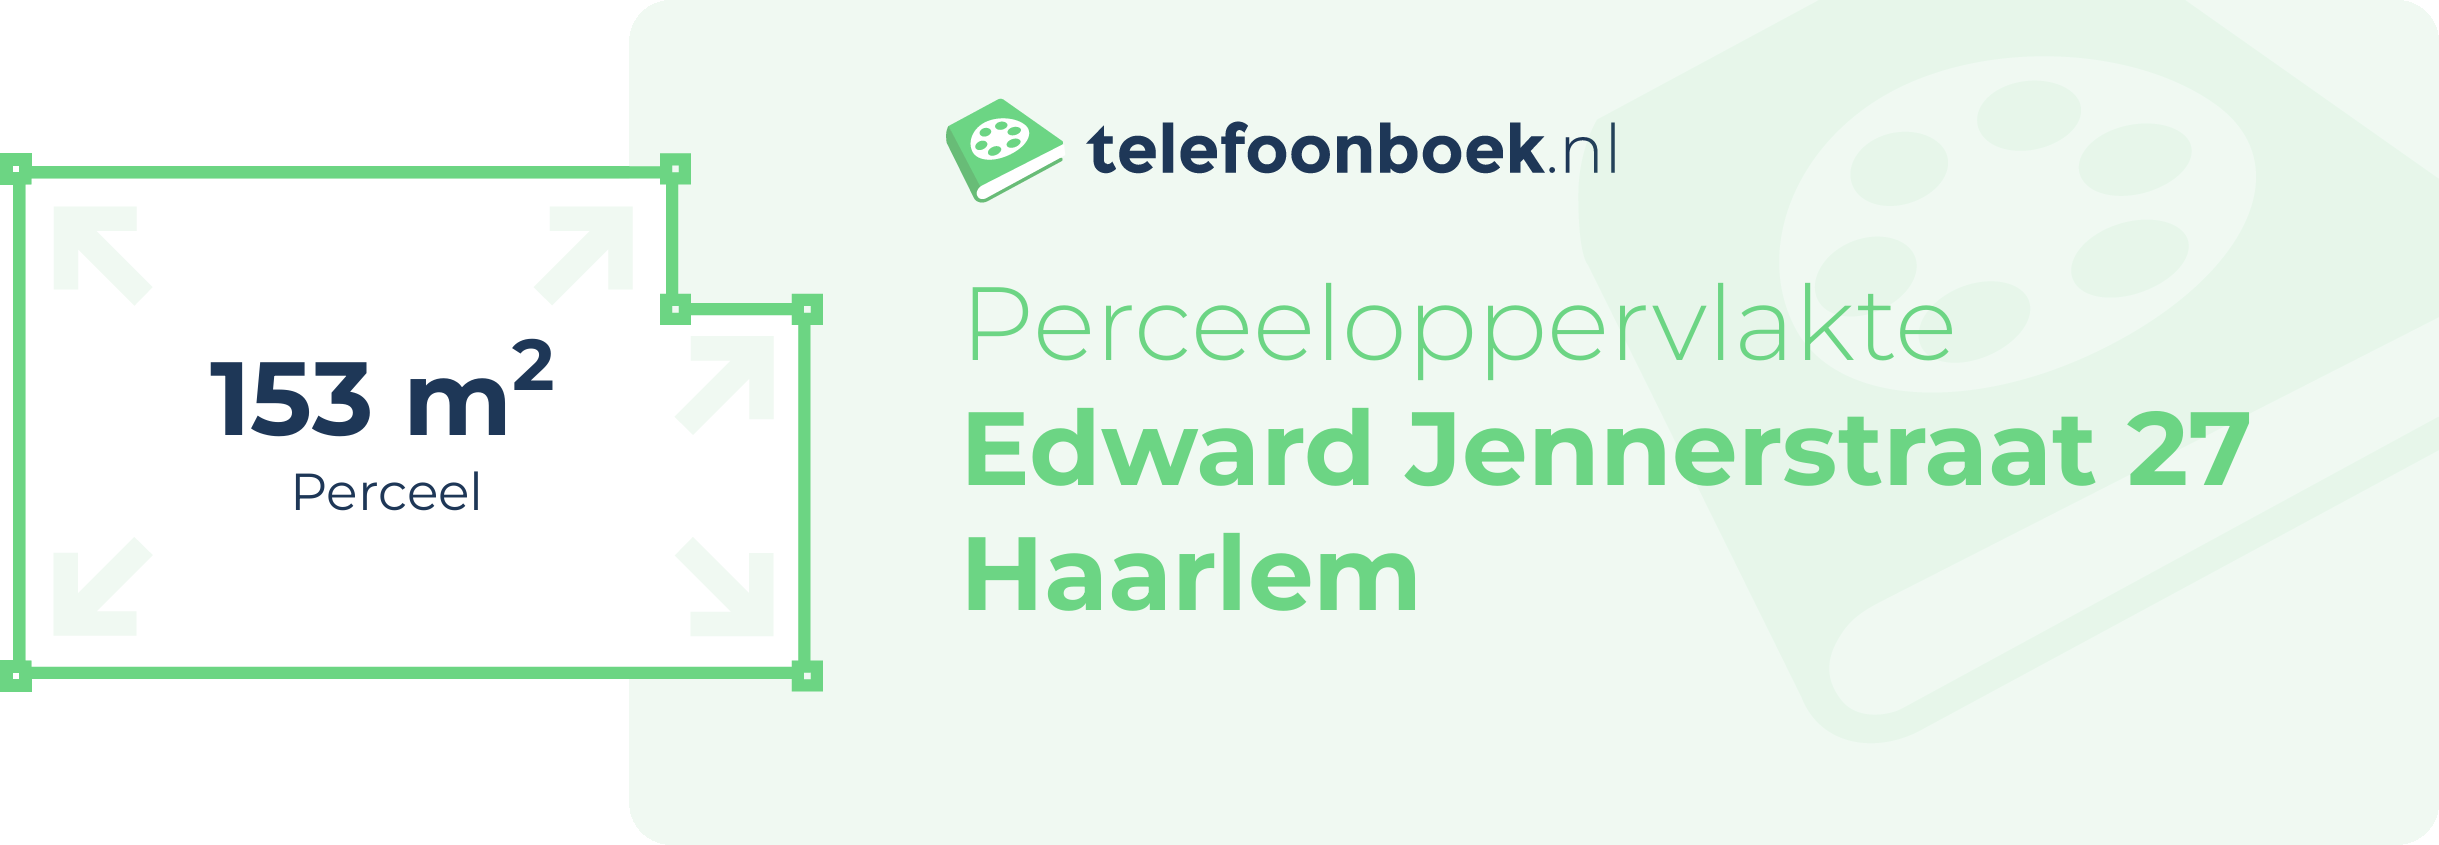 Perceeloppervlakte Edward Jennerstraat 27 Haarlem